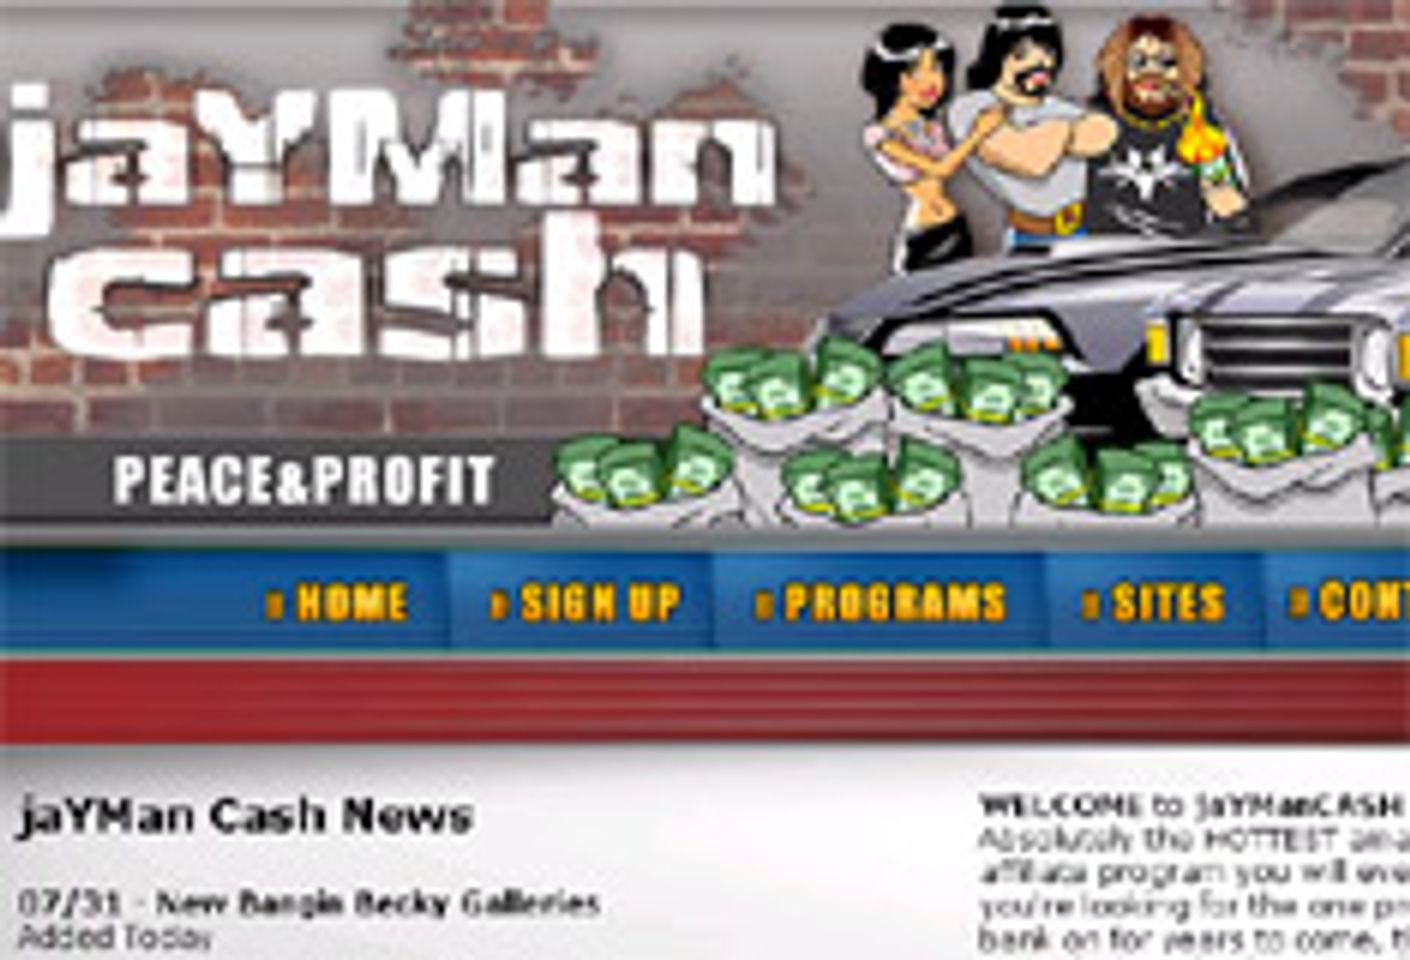 Riley, Leach, jaYMan Form Company; Launch jaYManCash.com